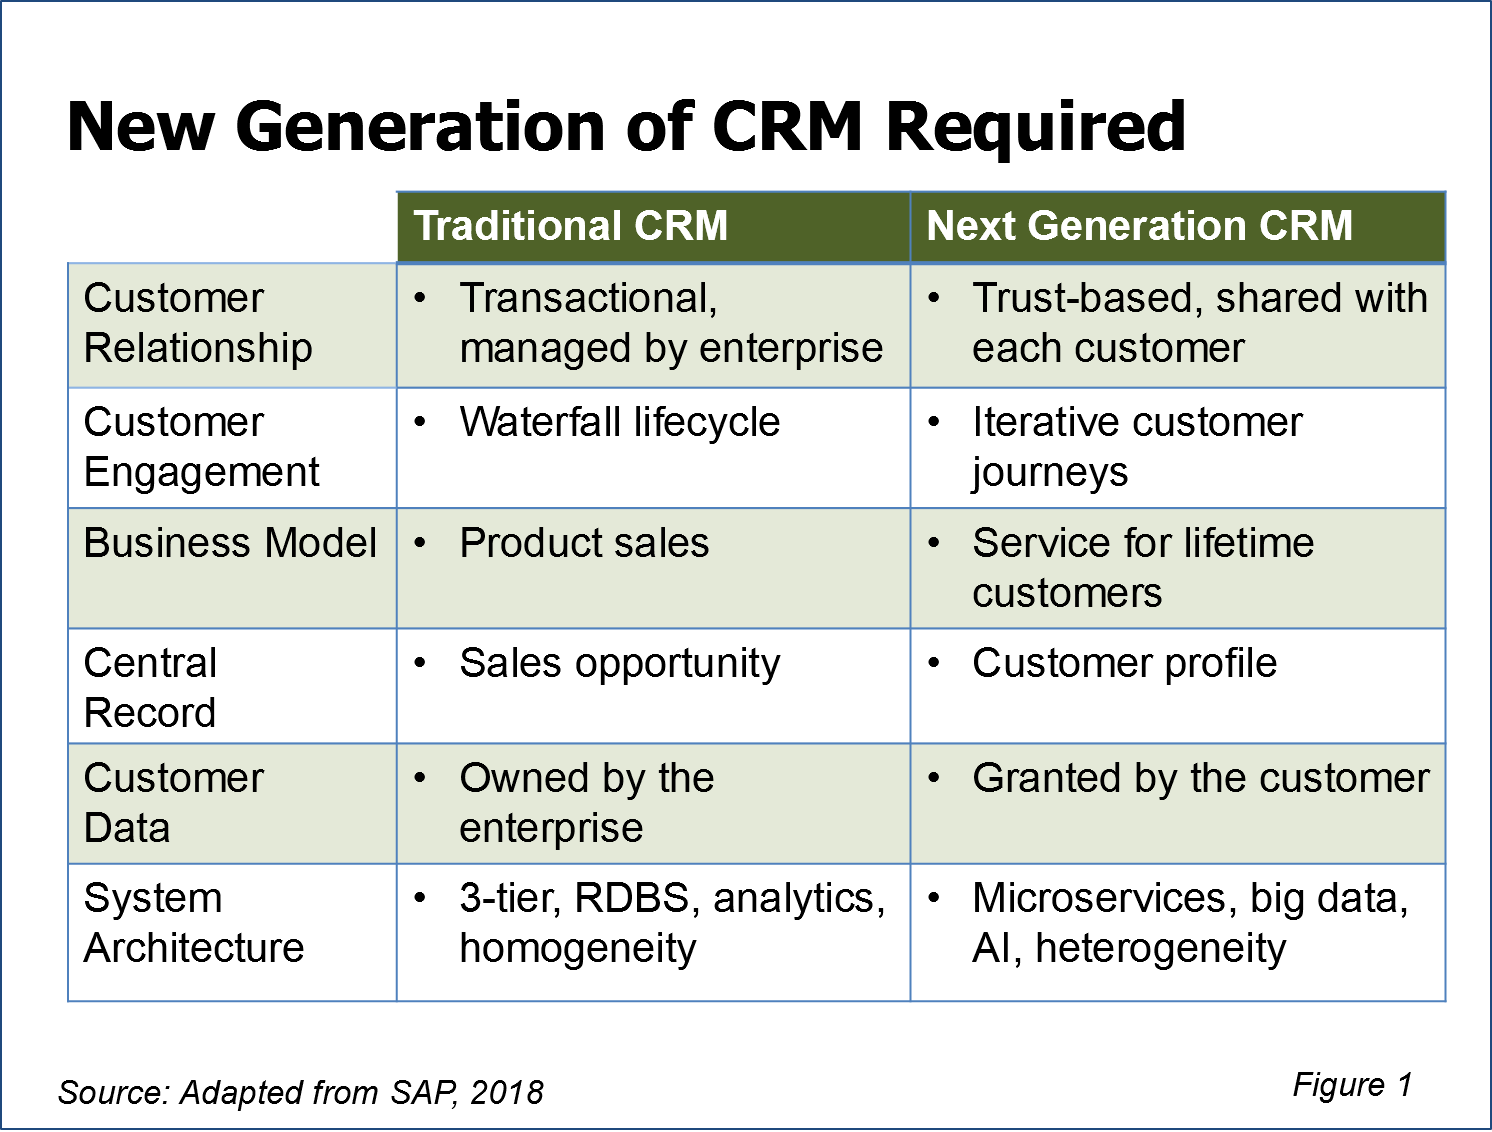 Next Generation CRM